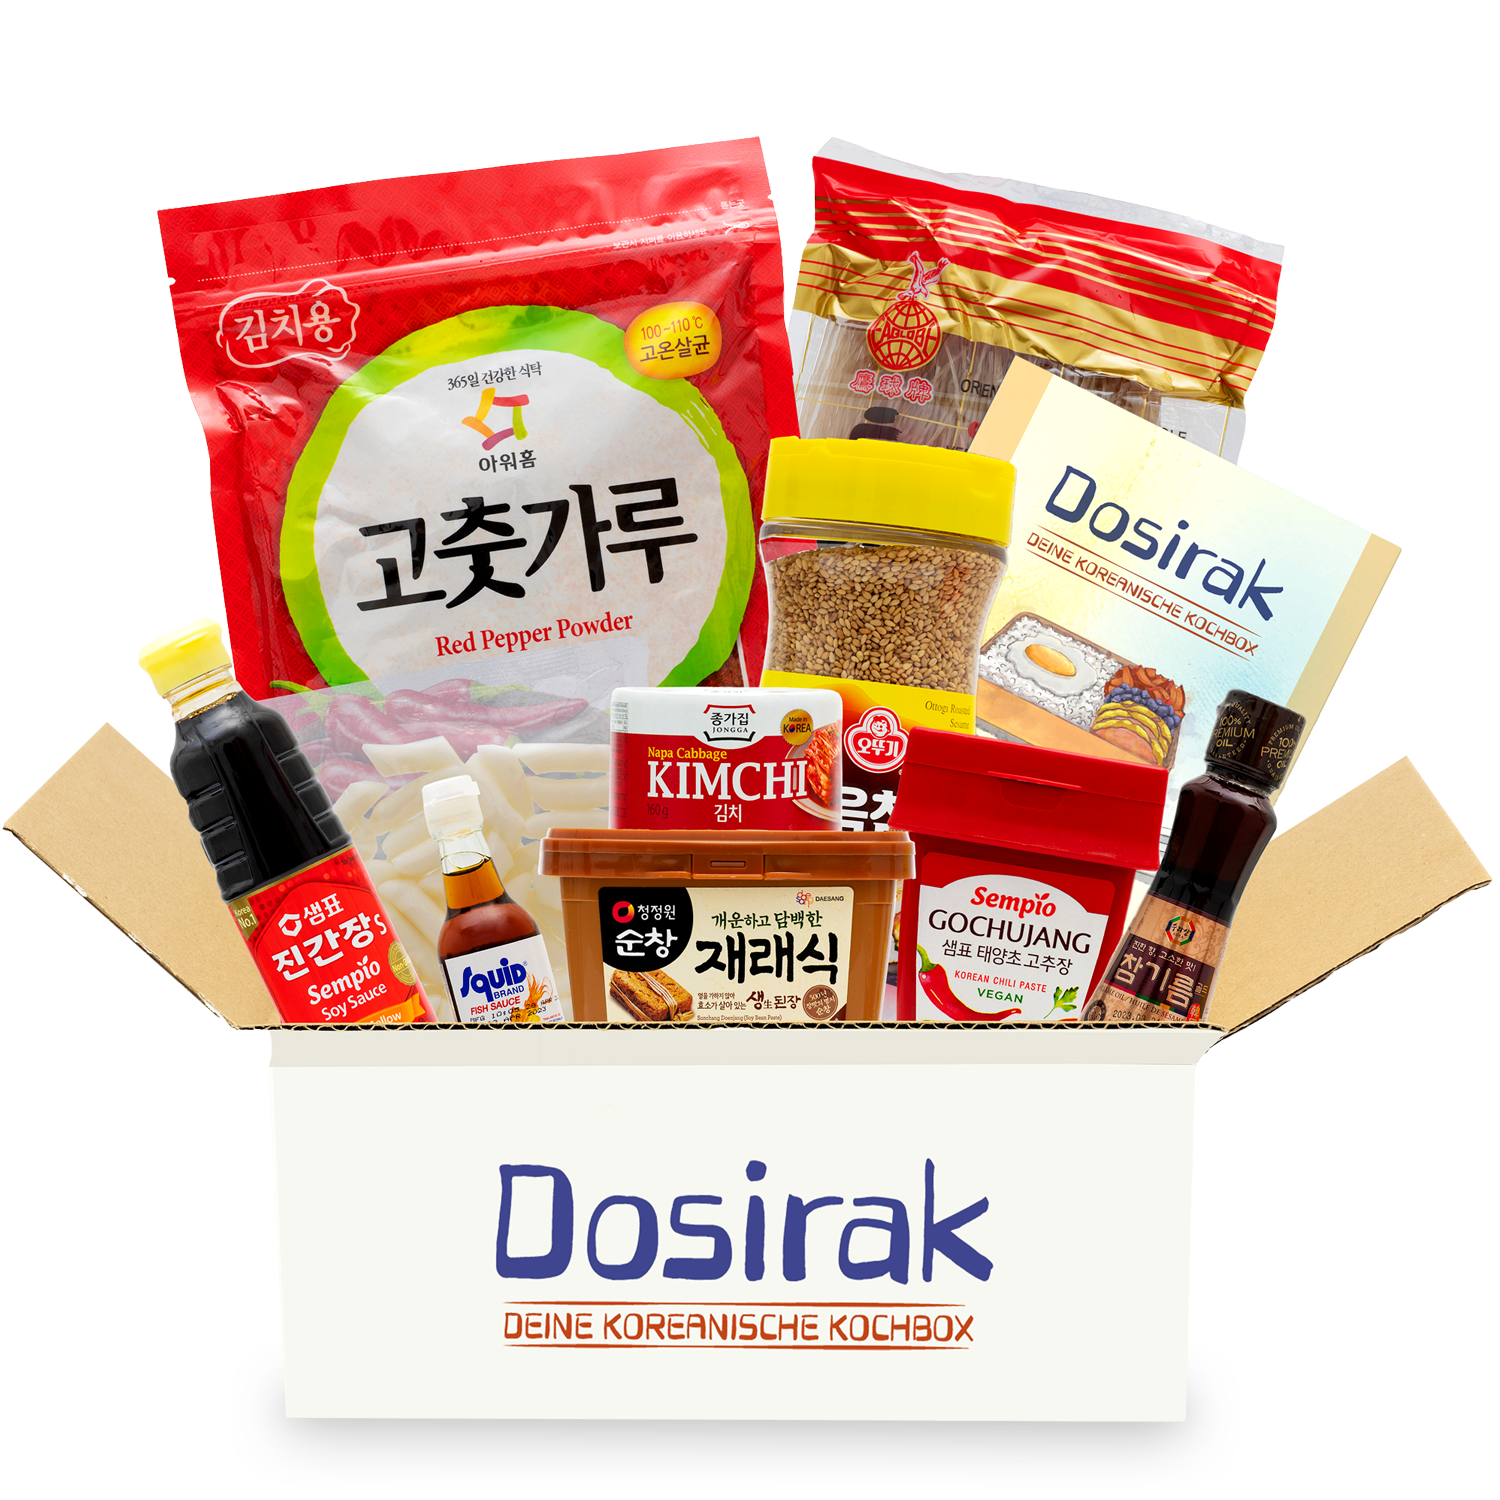 Dosirak: Korea-Kochbox zum Nachkochen von 25 koreanischen Rezepten